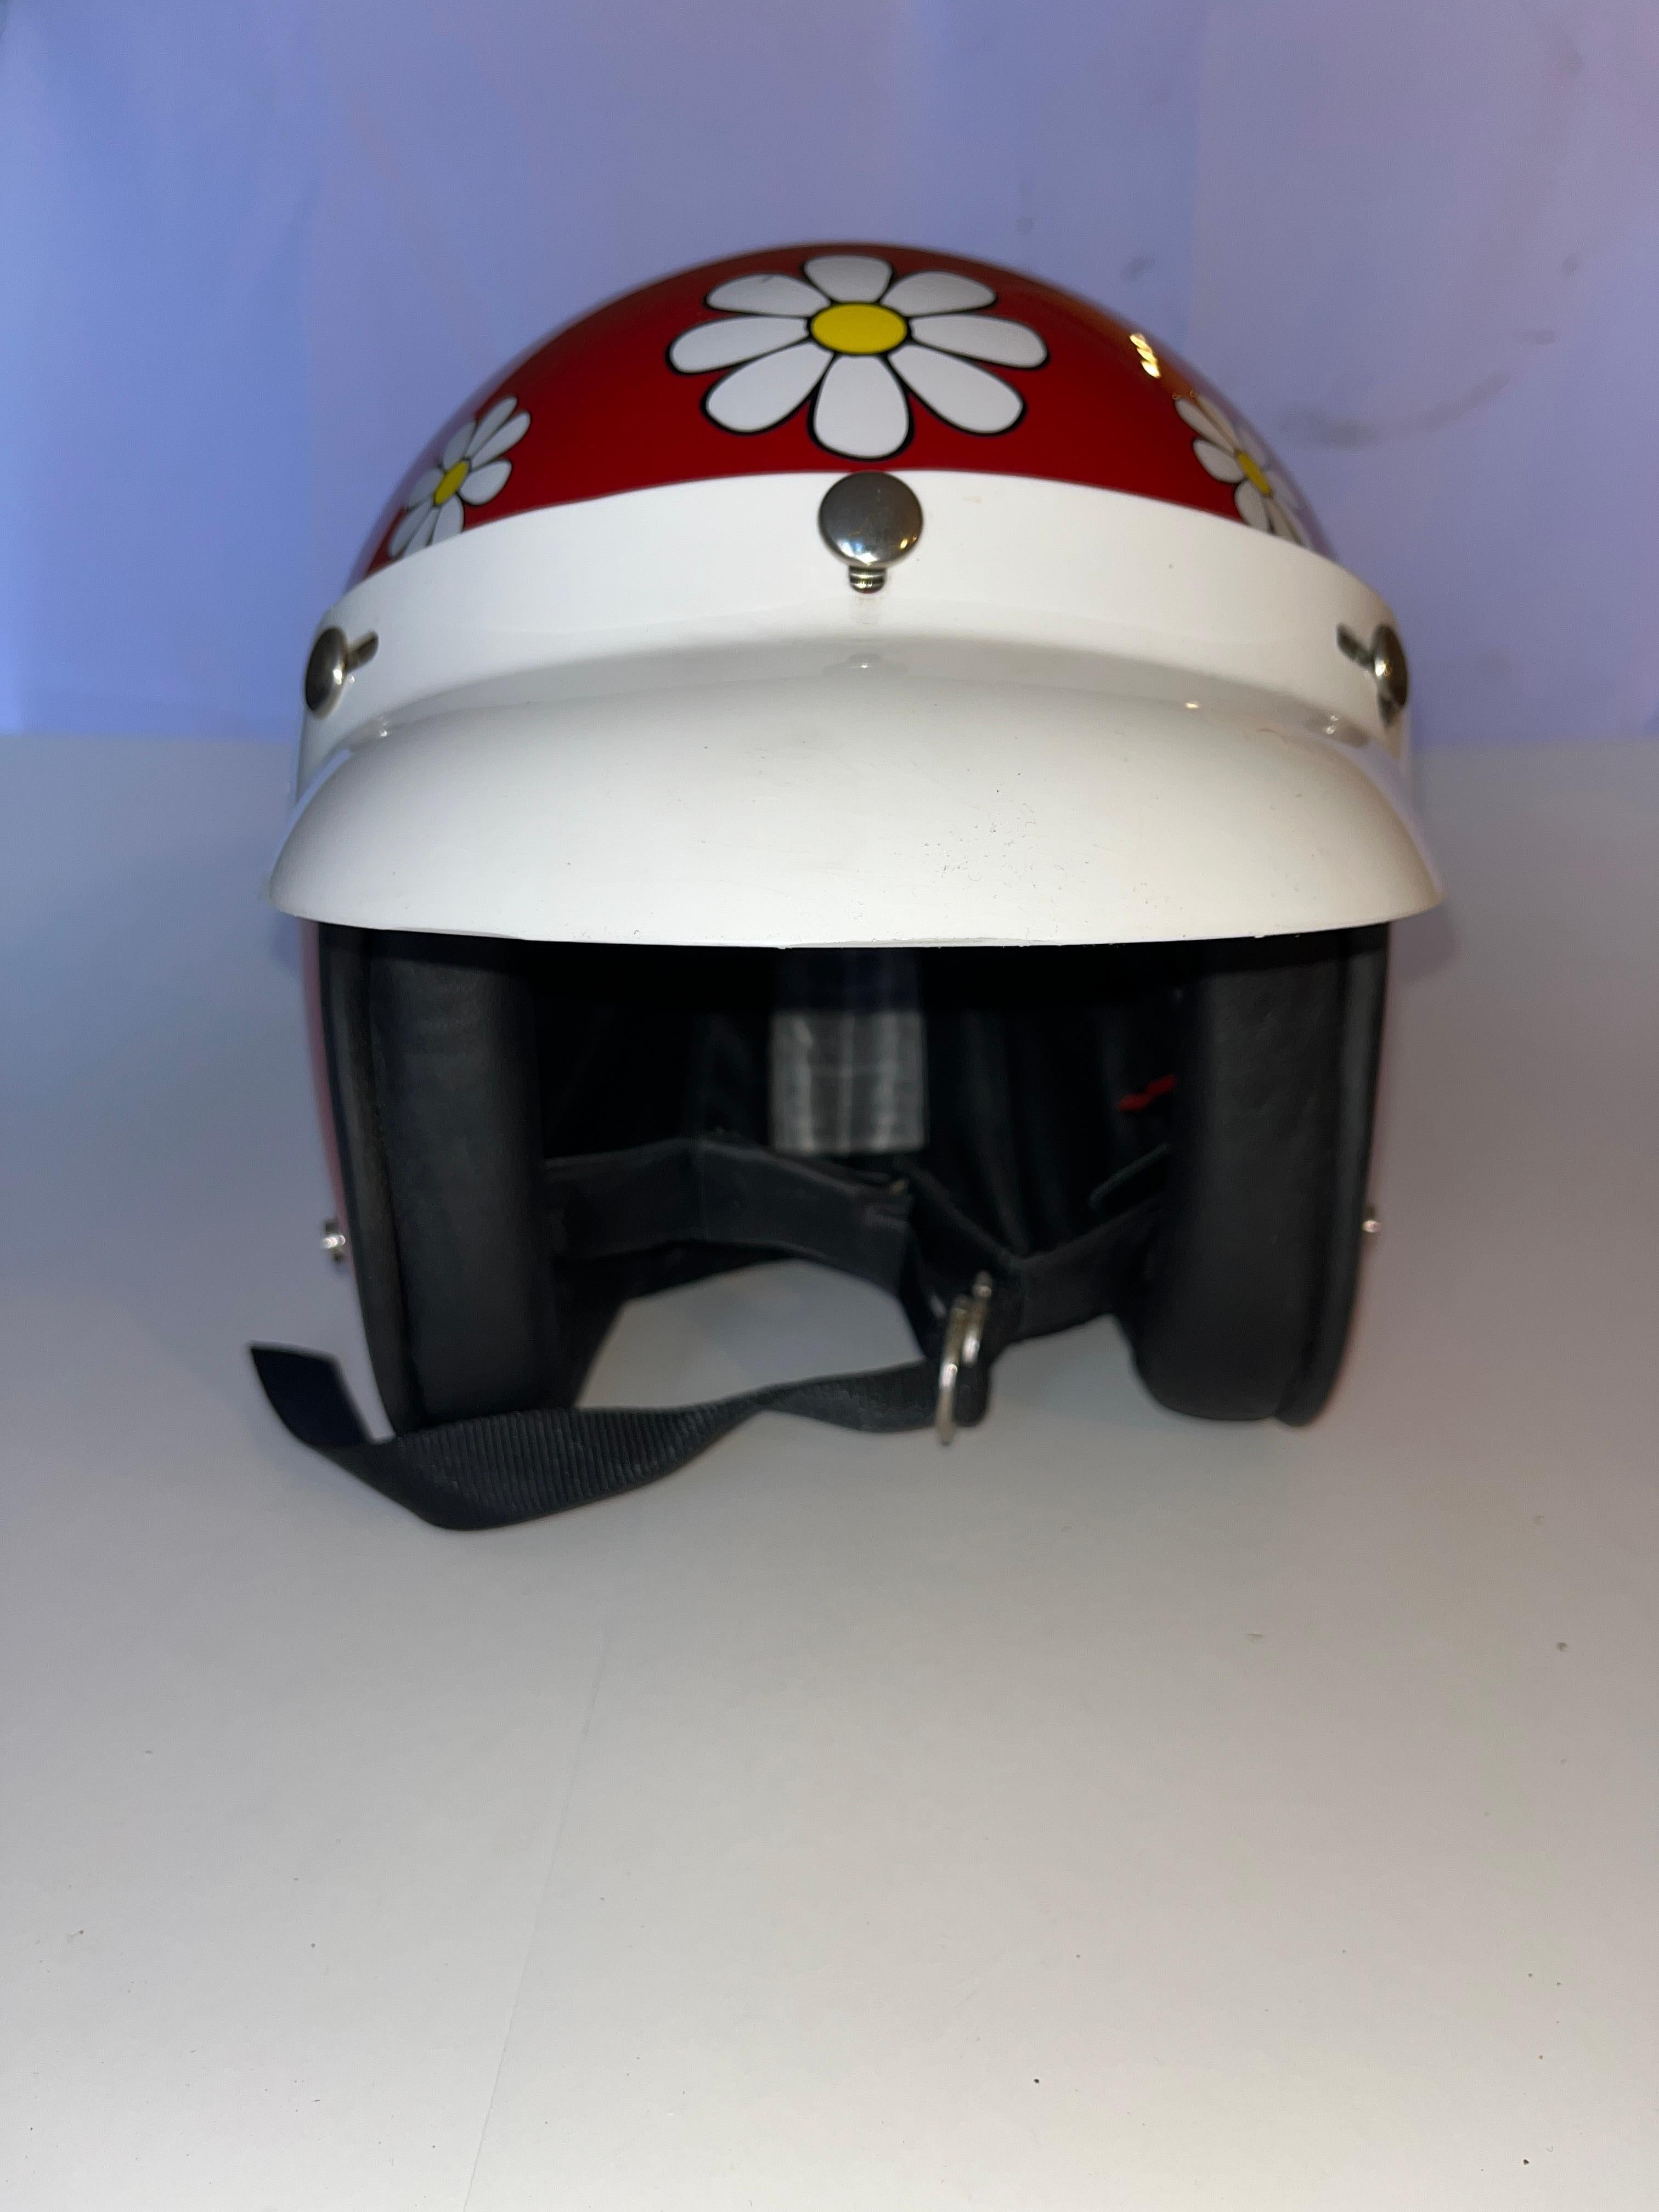 Limited edition Davida Classic Jet motorcycle helmet in rare 